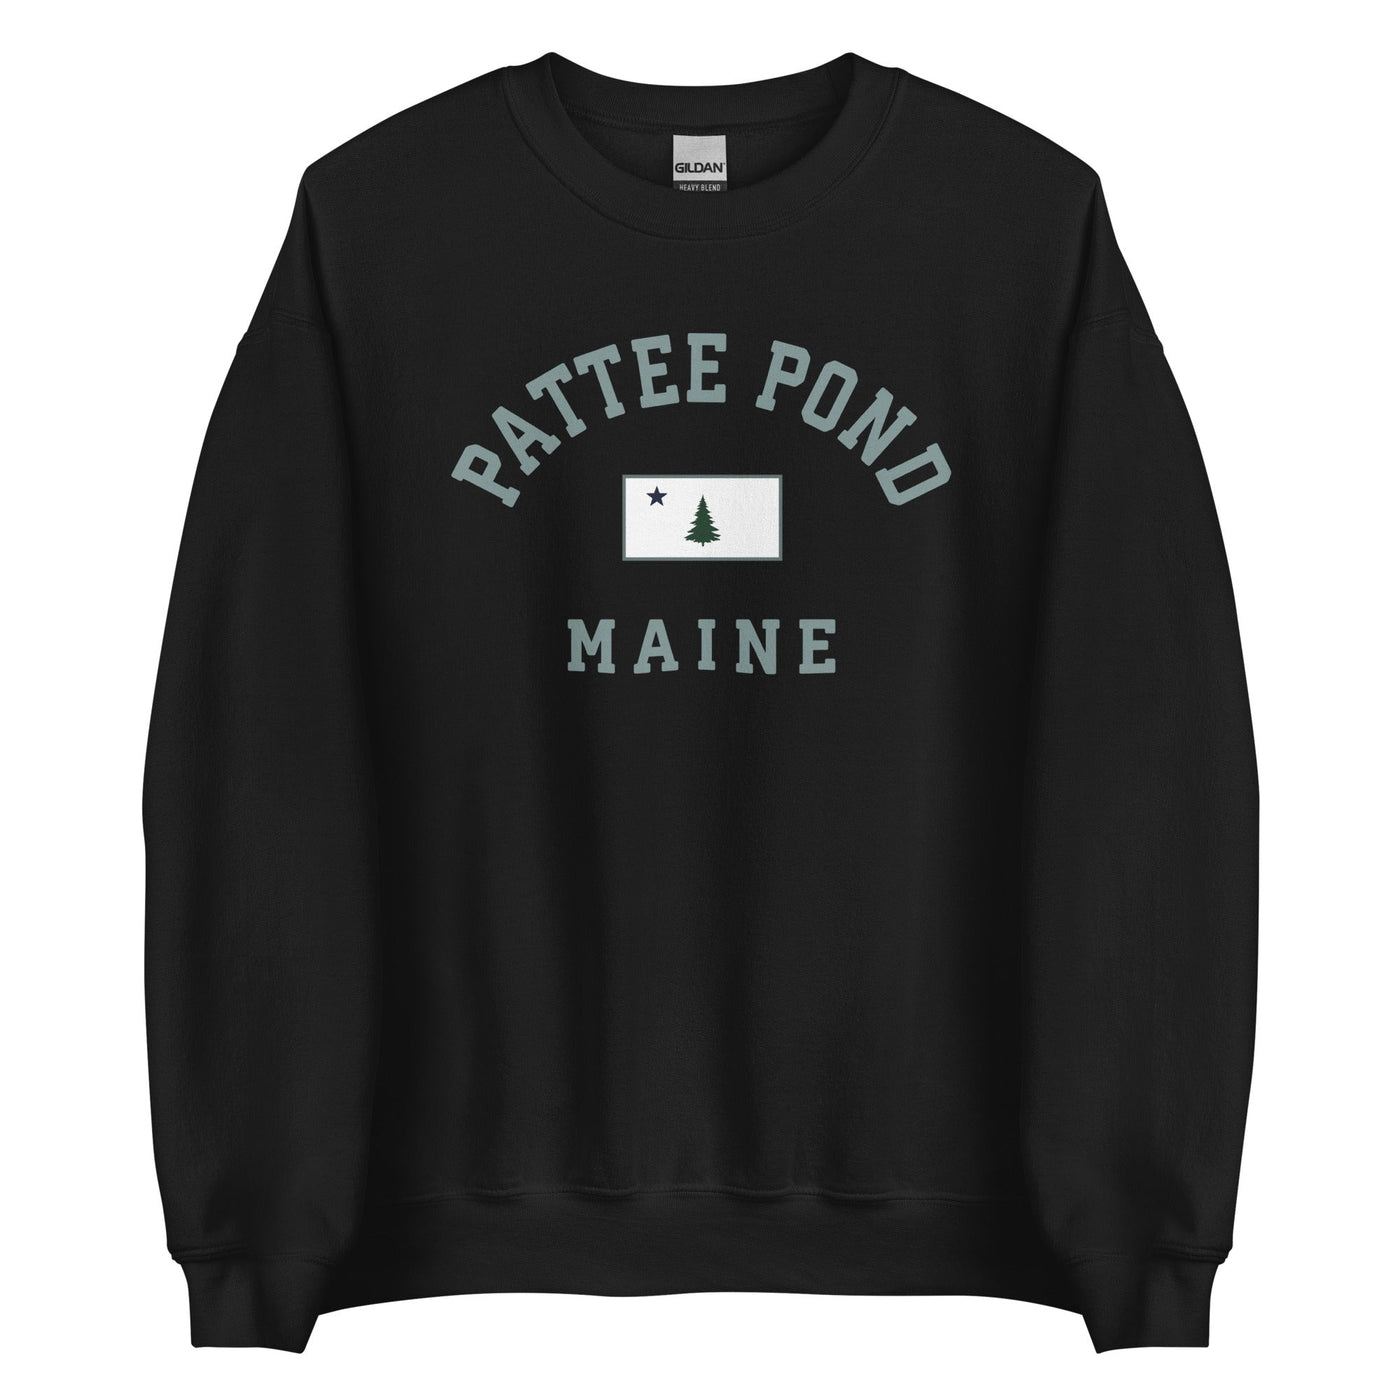 Vintage Pattee Pond Crewneck Sweatshirt - 1901 Original Maine Flag-207 Threads